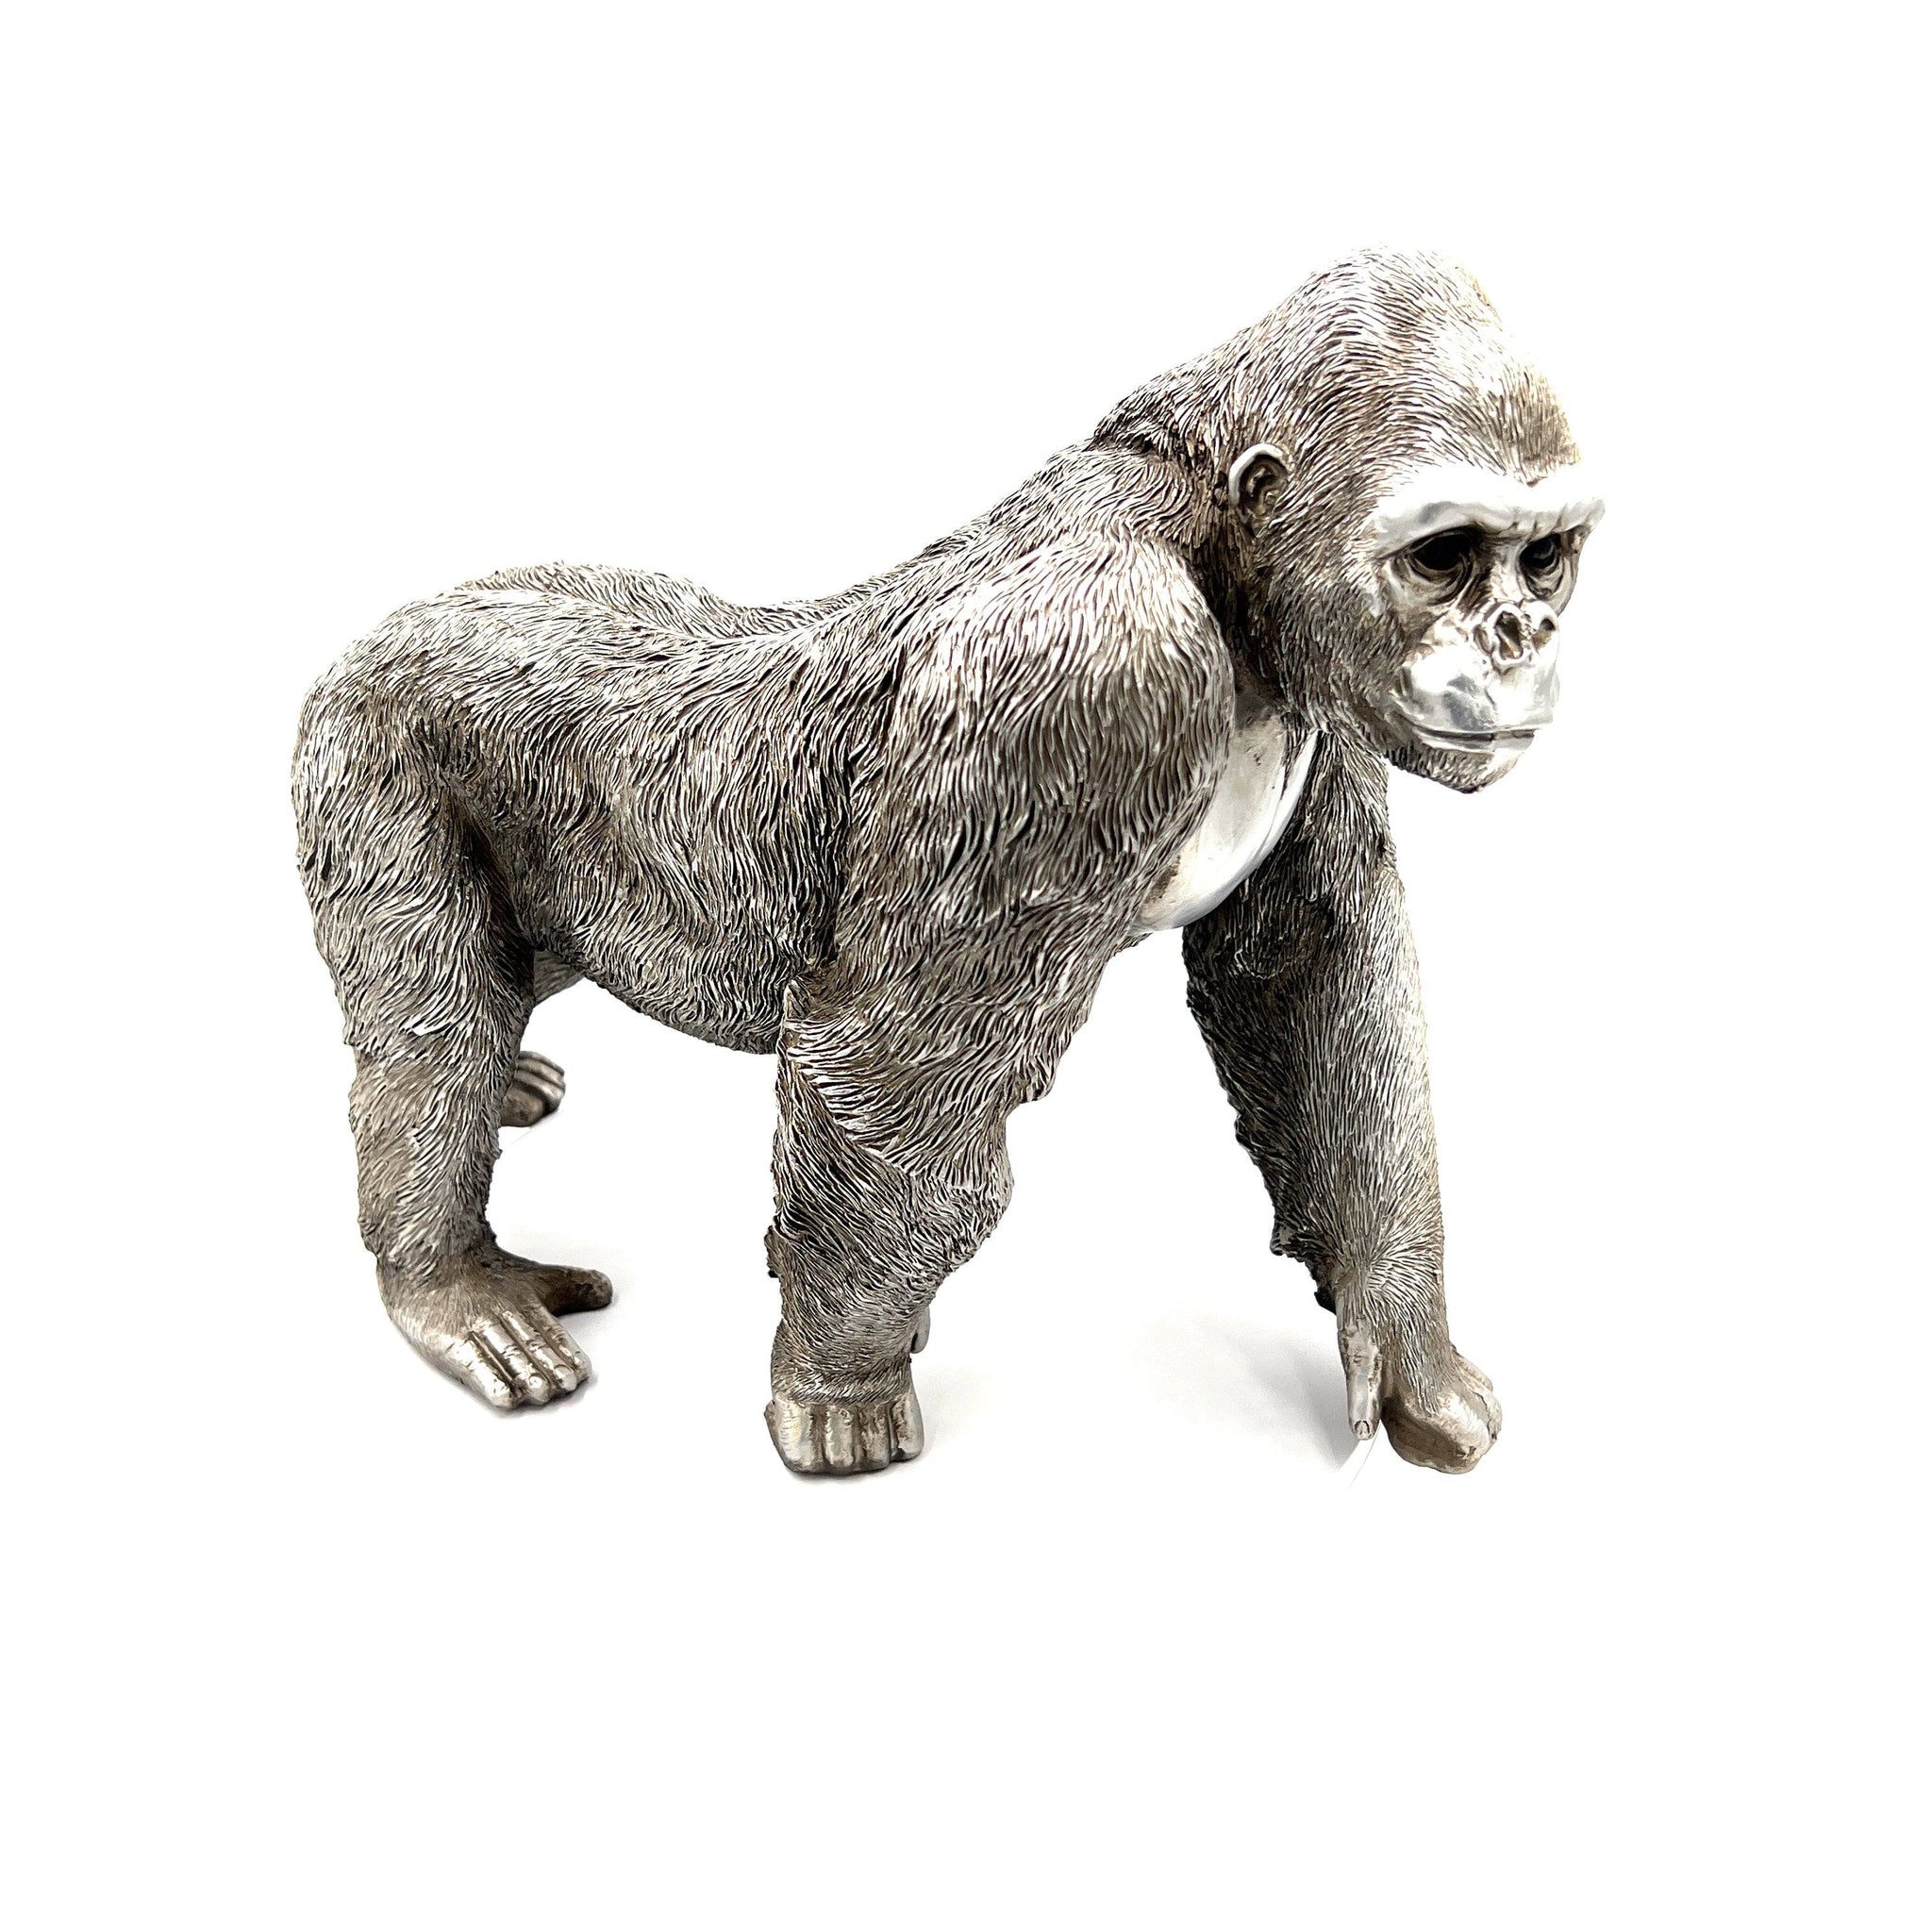 Antique Silver Large Standing Gorilla Ornament